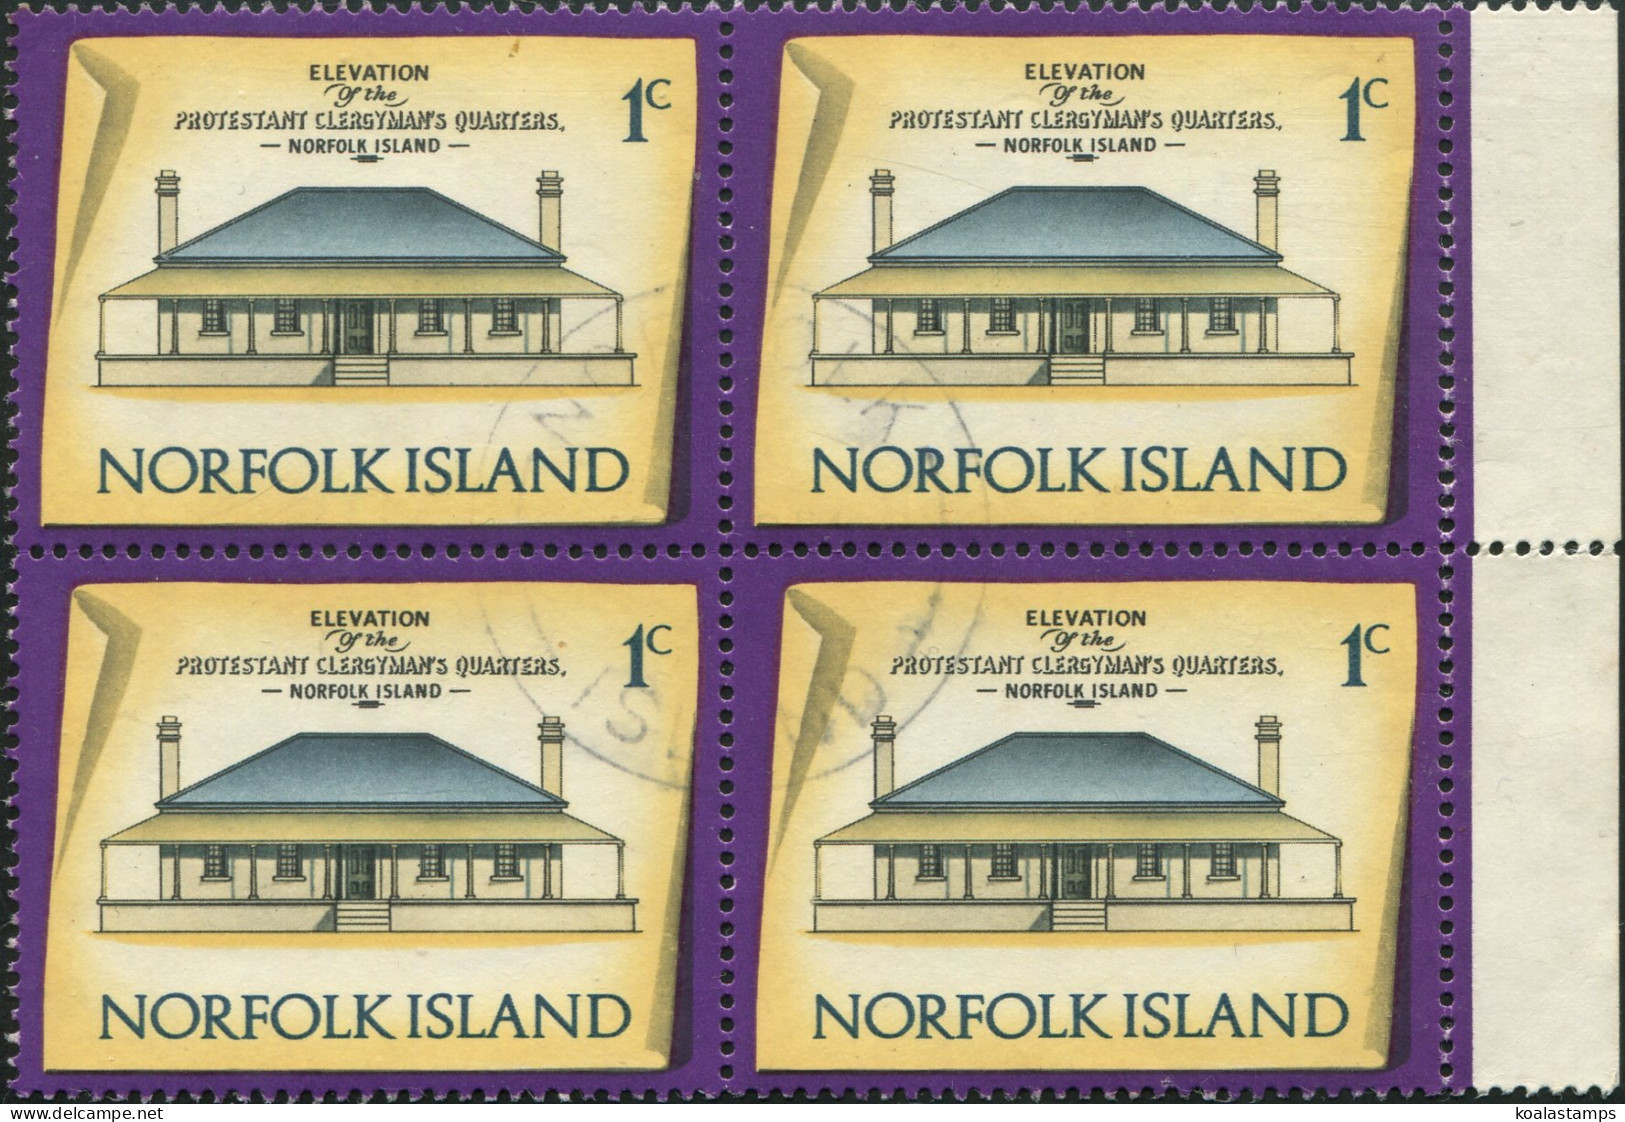 Norfolk Island 1973 SG133 1c Historic Building Block FU - Norfolkinsel